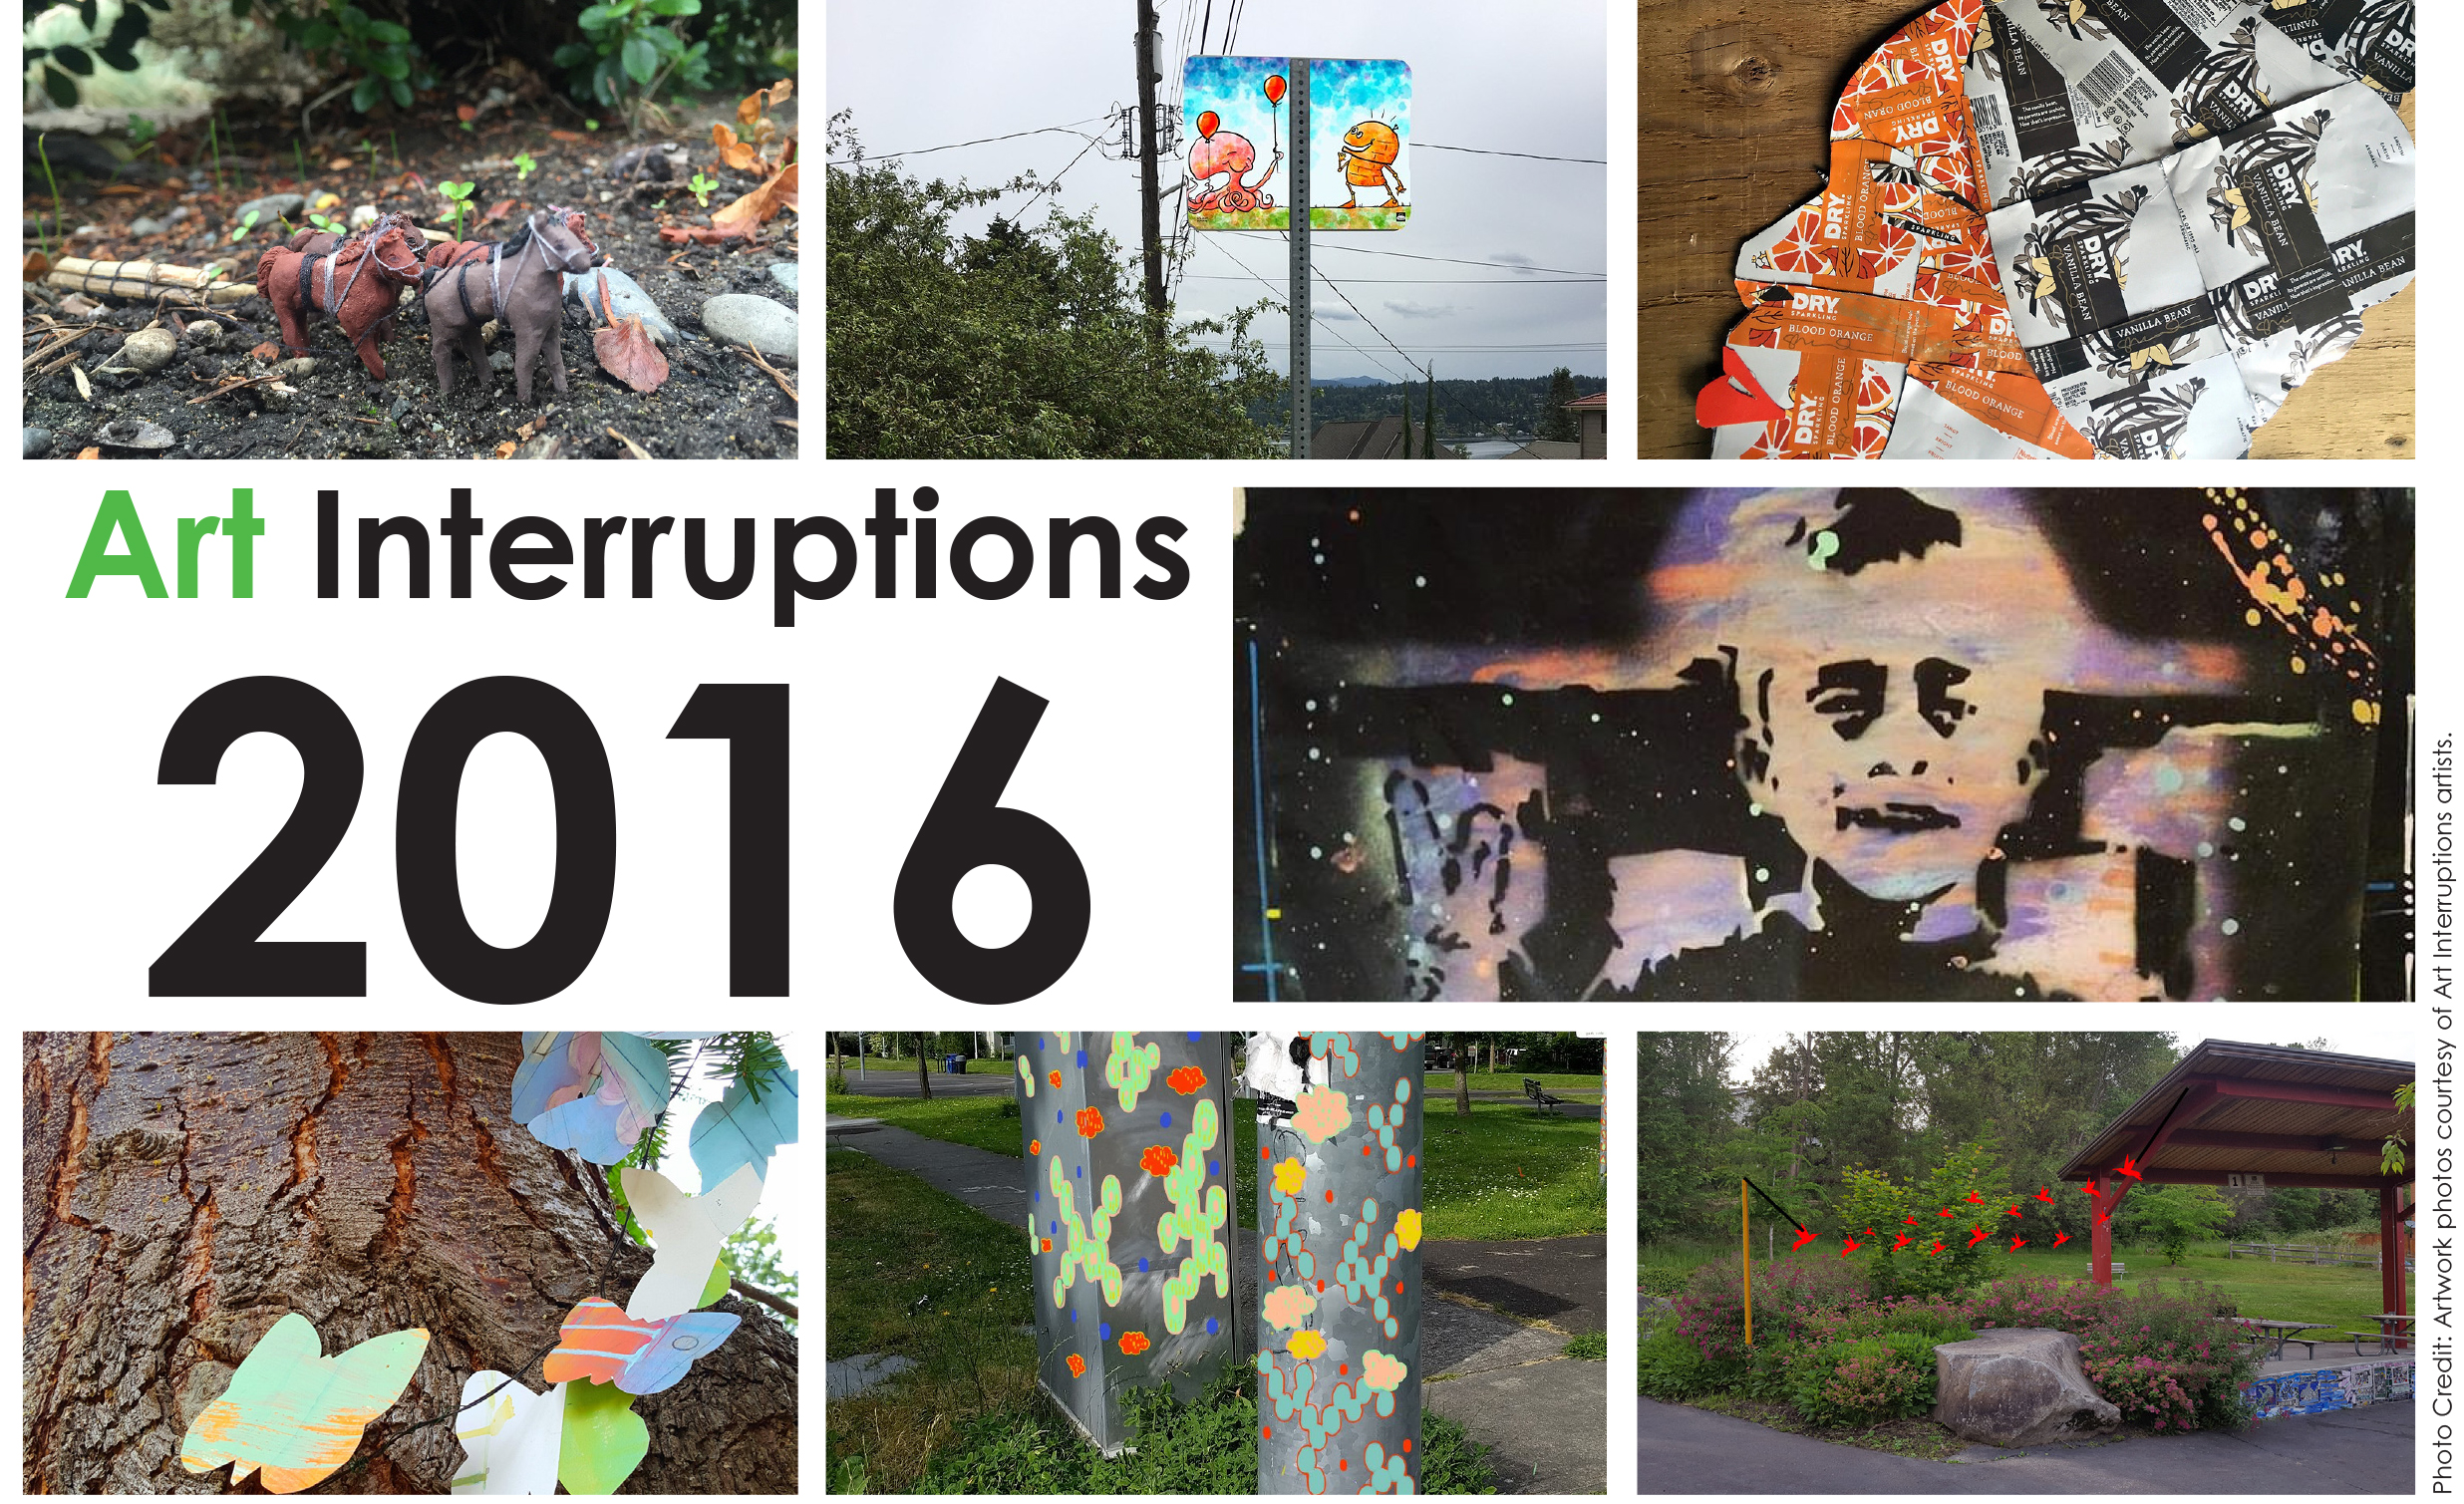 Art Interruptions 2016 images